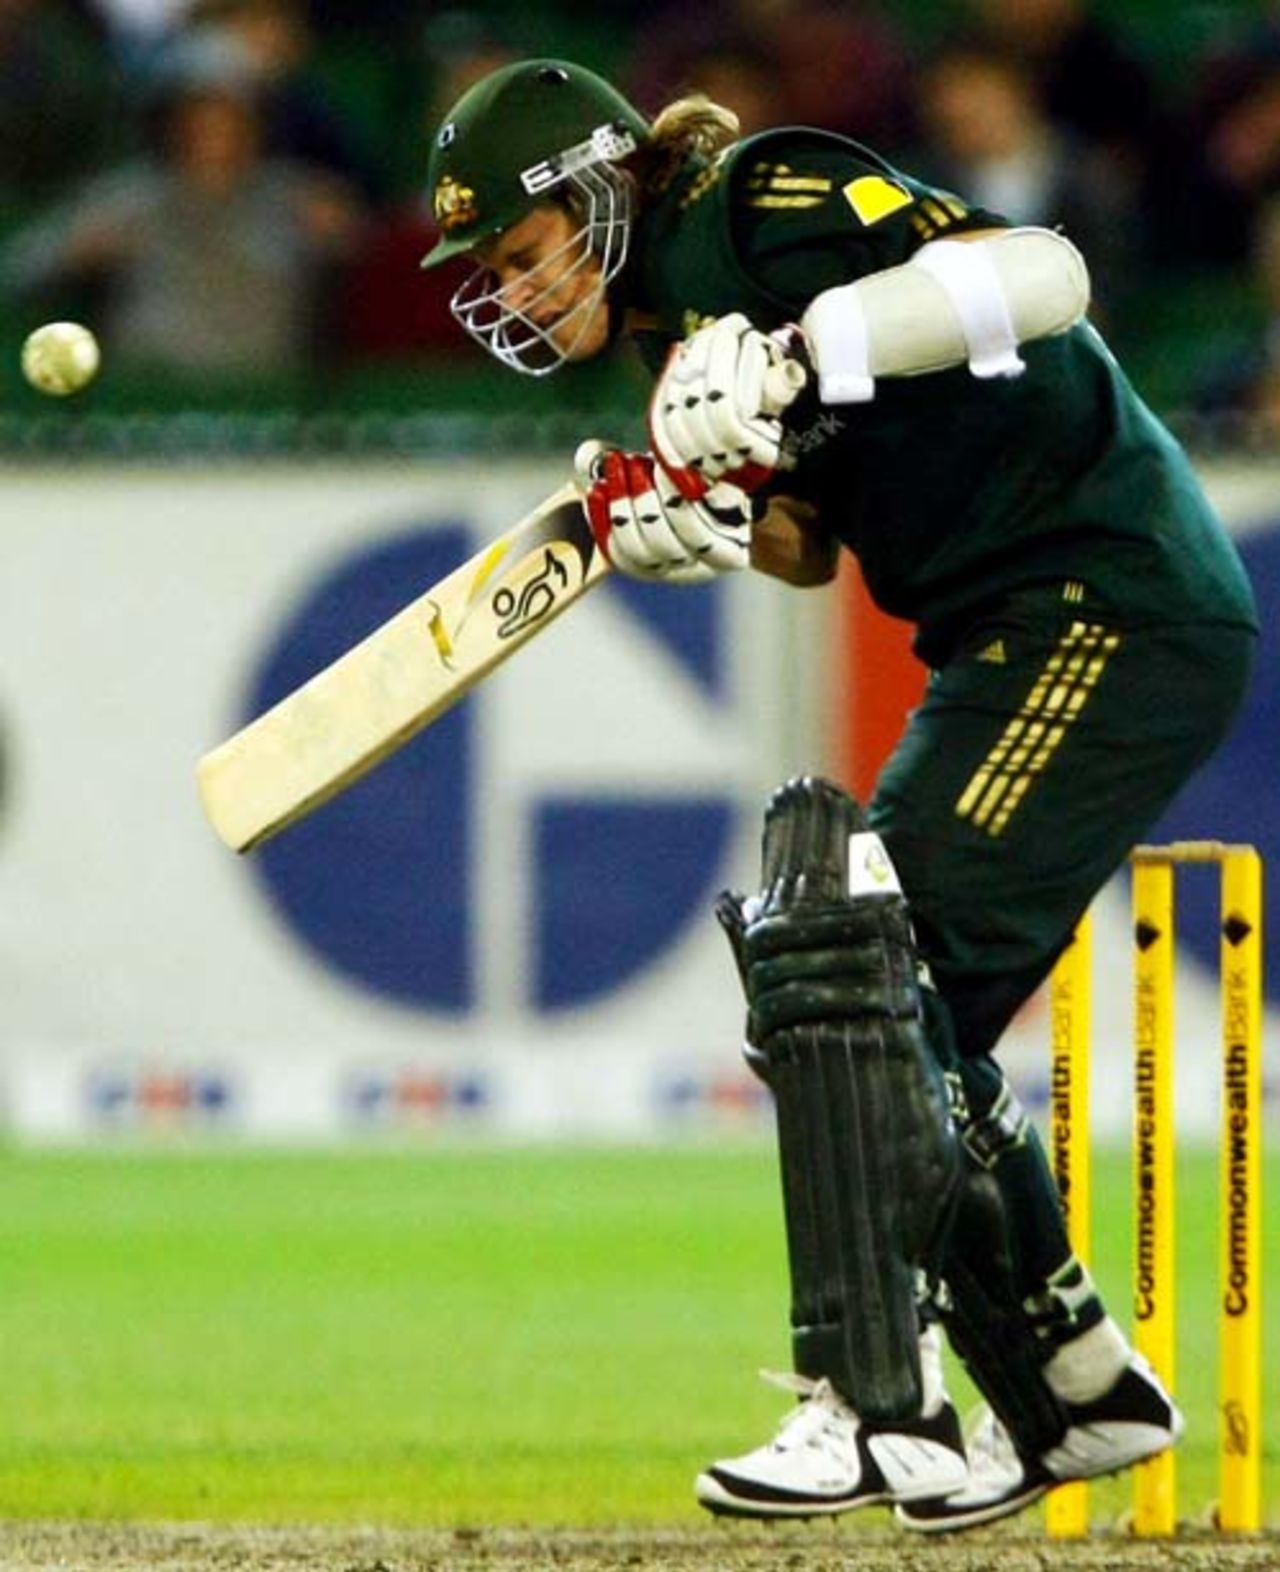 Nathan Bracken tries to evade a short delivery, Australia v Sri Lanka, CB Series, 12th ODI, Melbourne, February 29, 2008 

